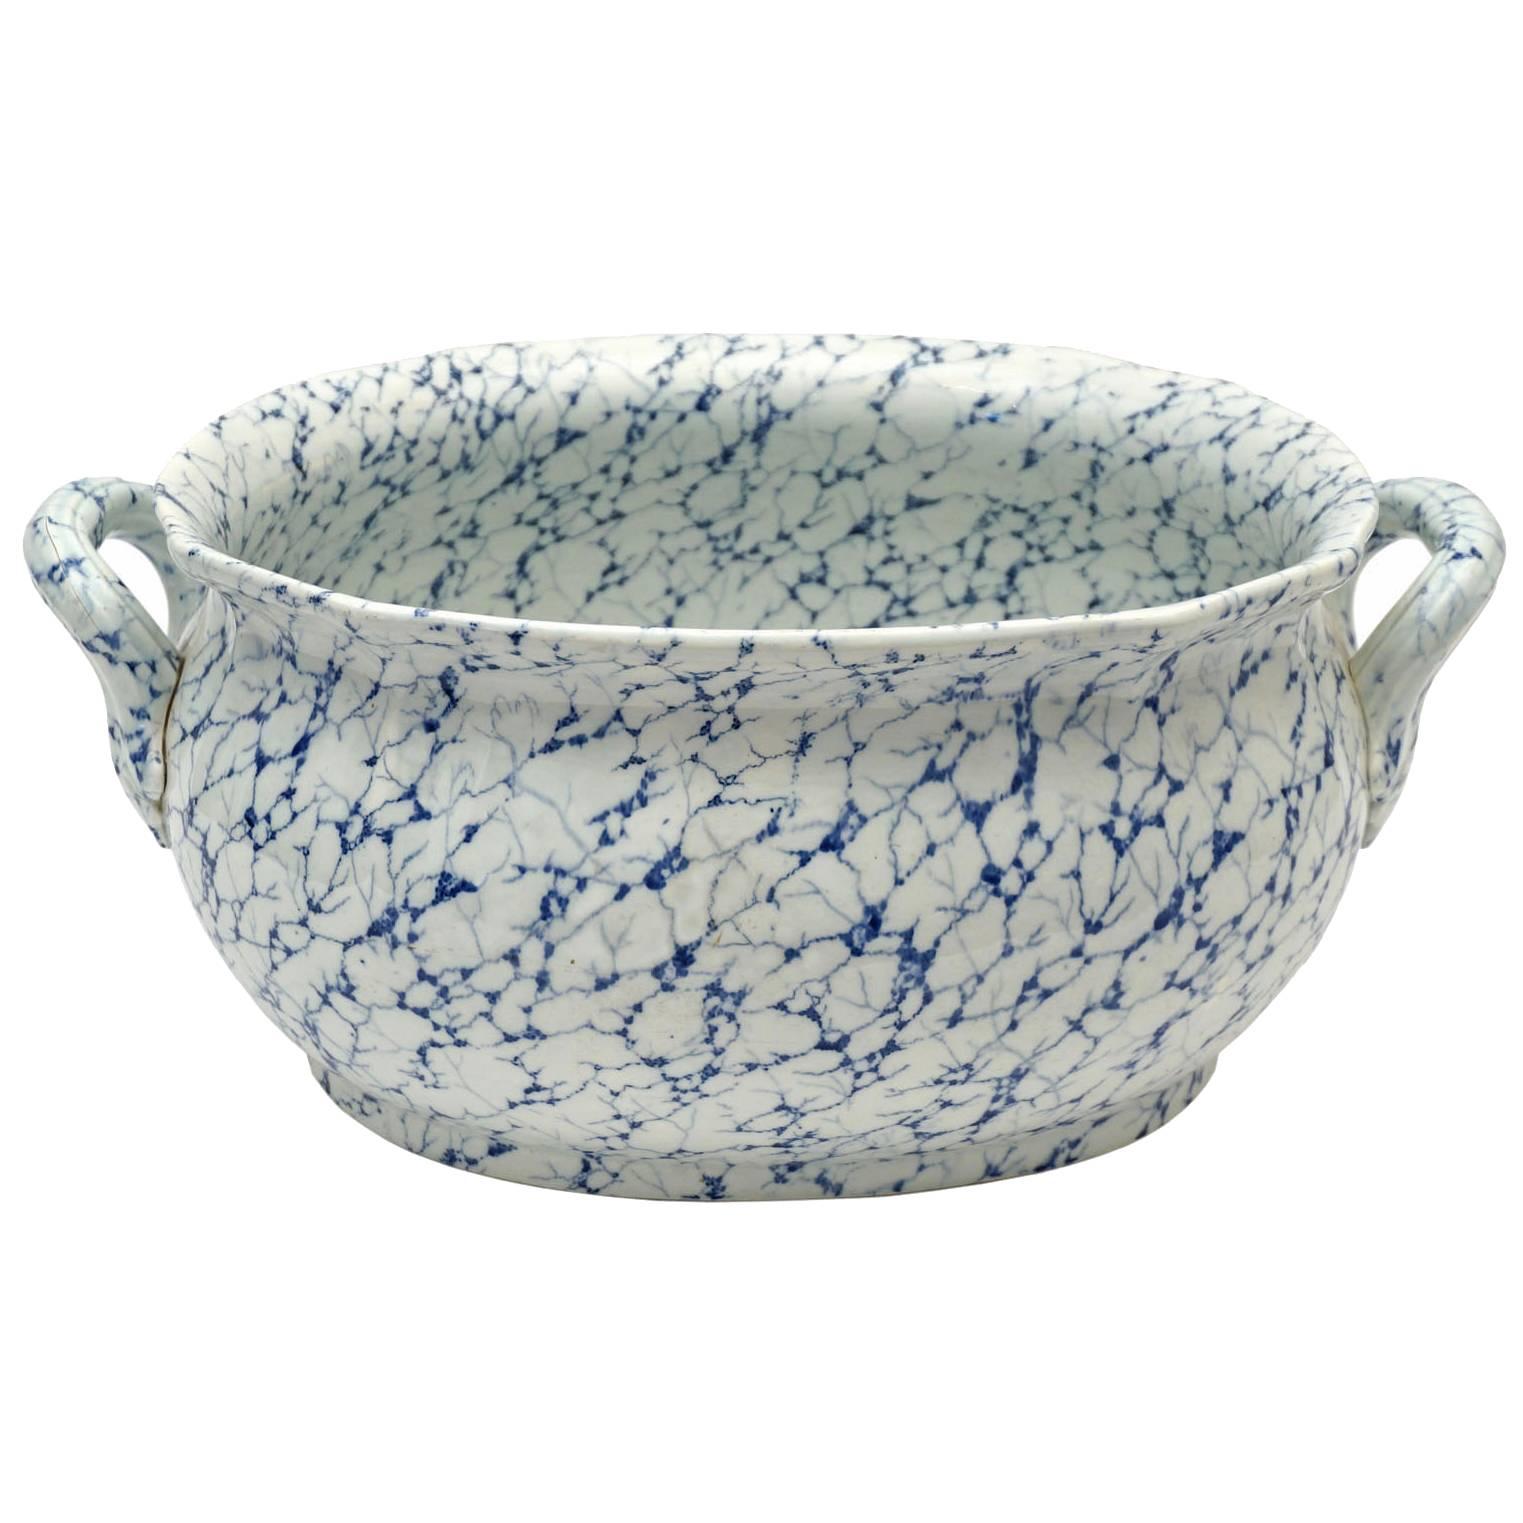 19th Century French Creil Porcelain Blue and White Jardinière/Basin